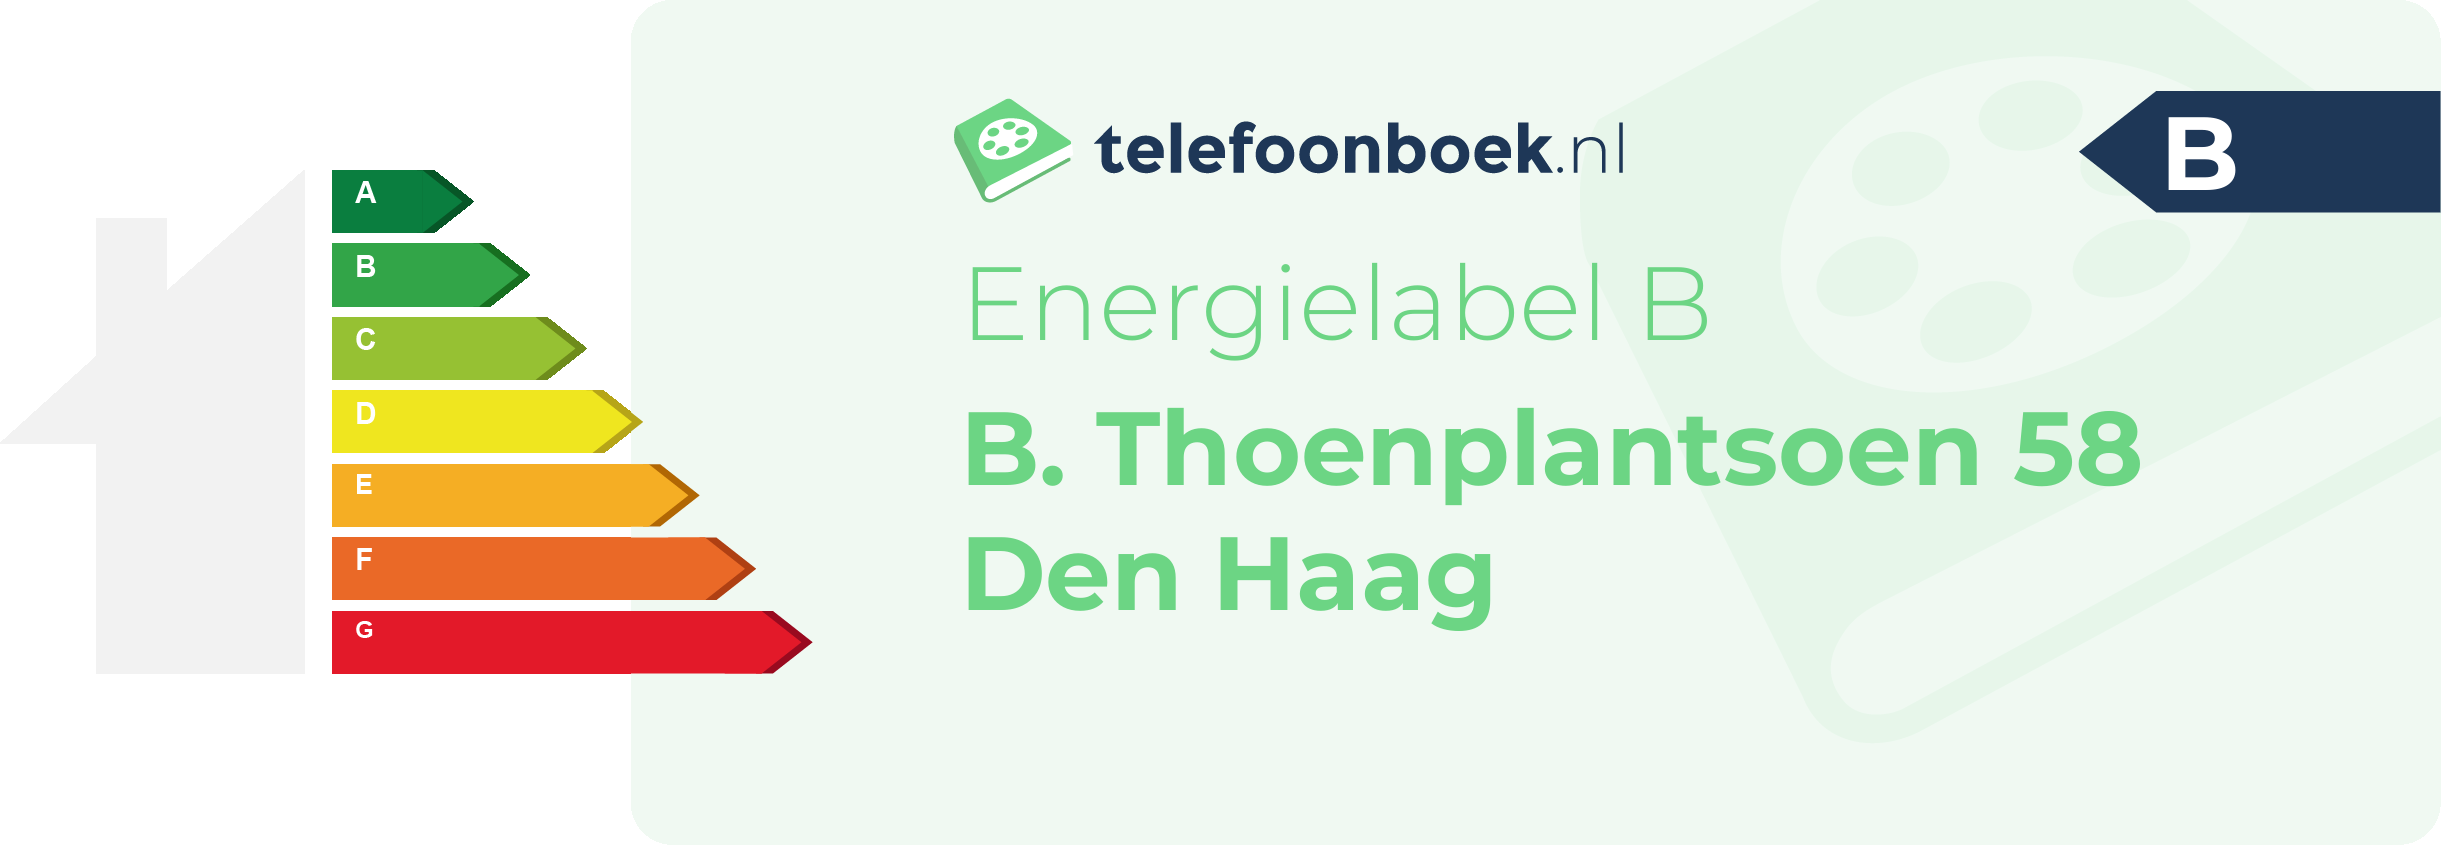 Energielabel B. Thoenplantsoen 58 Den Haag